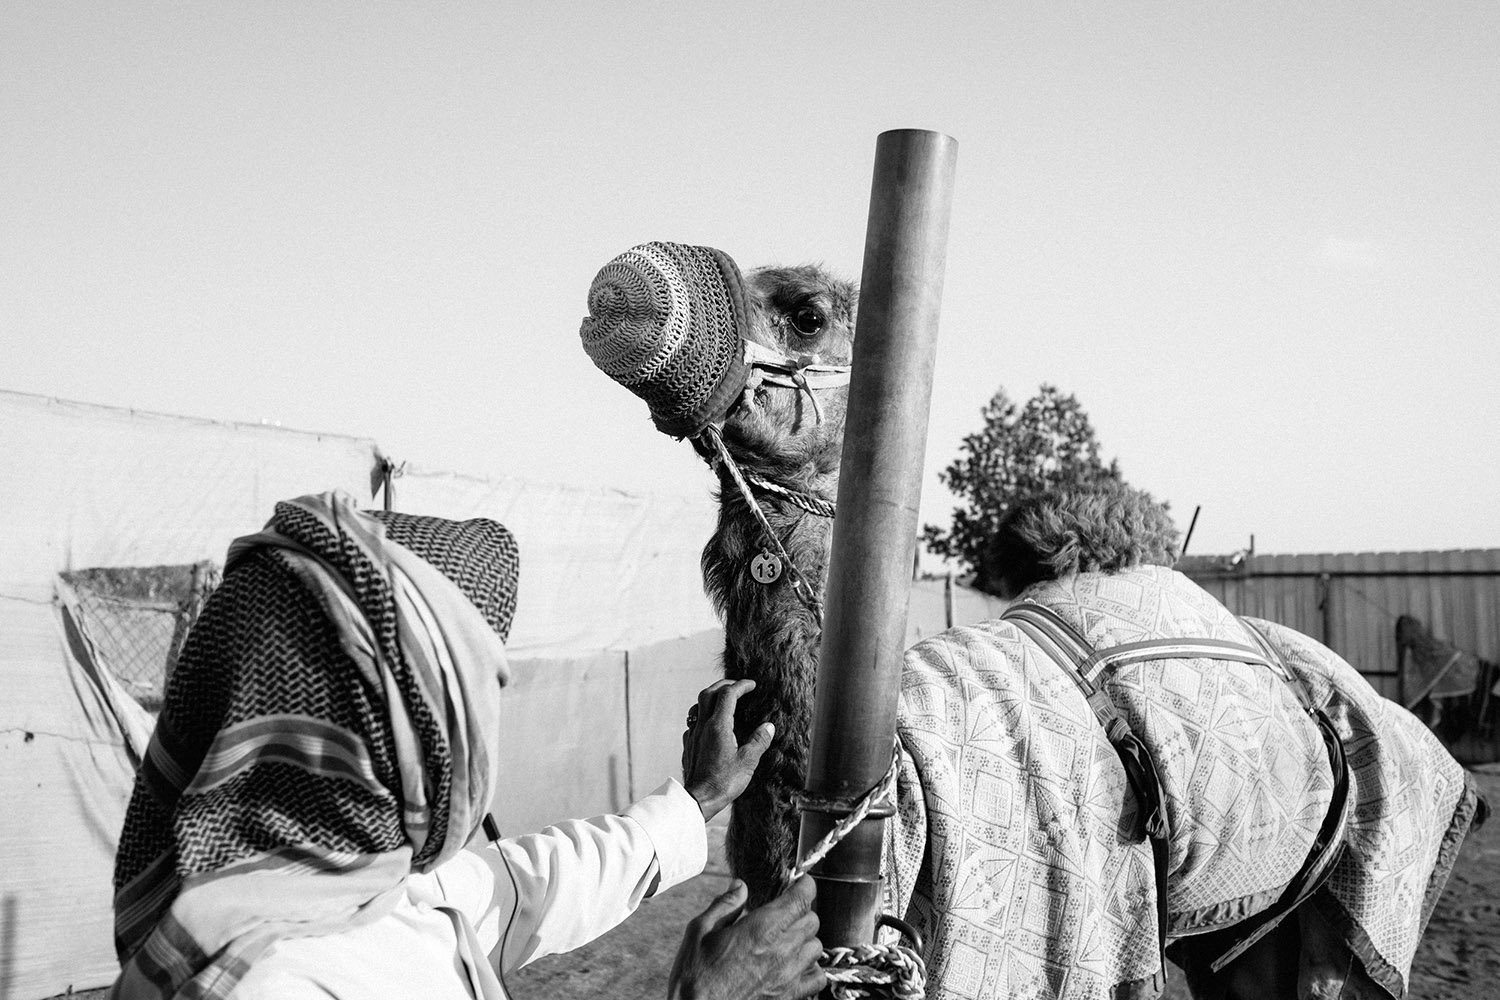 The Camel Farmer in Al Ain